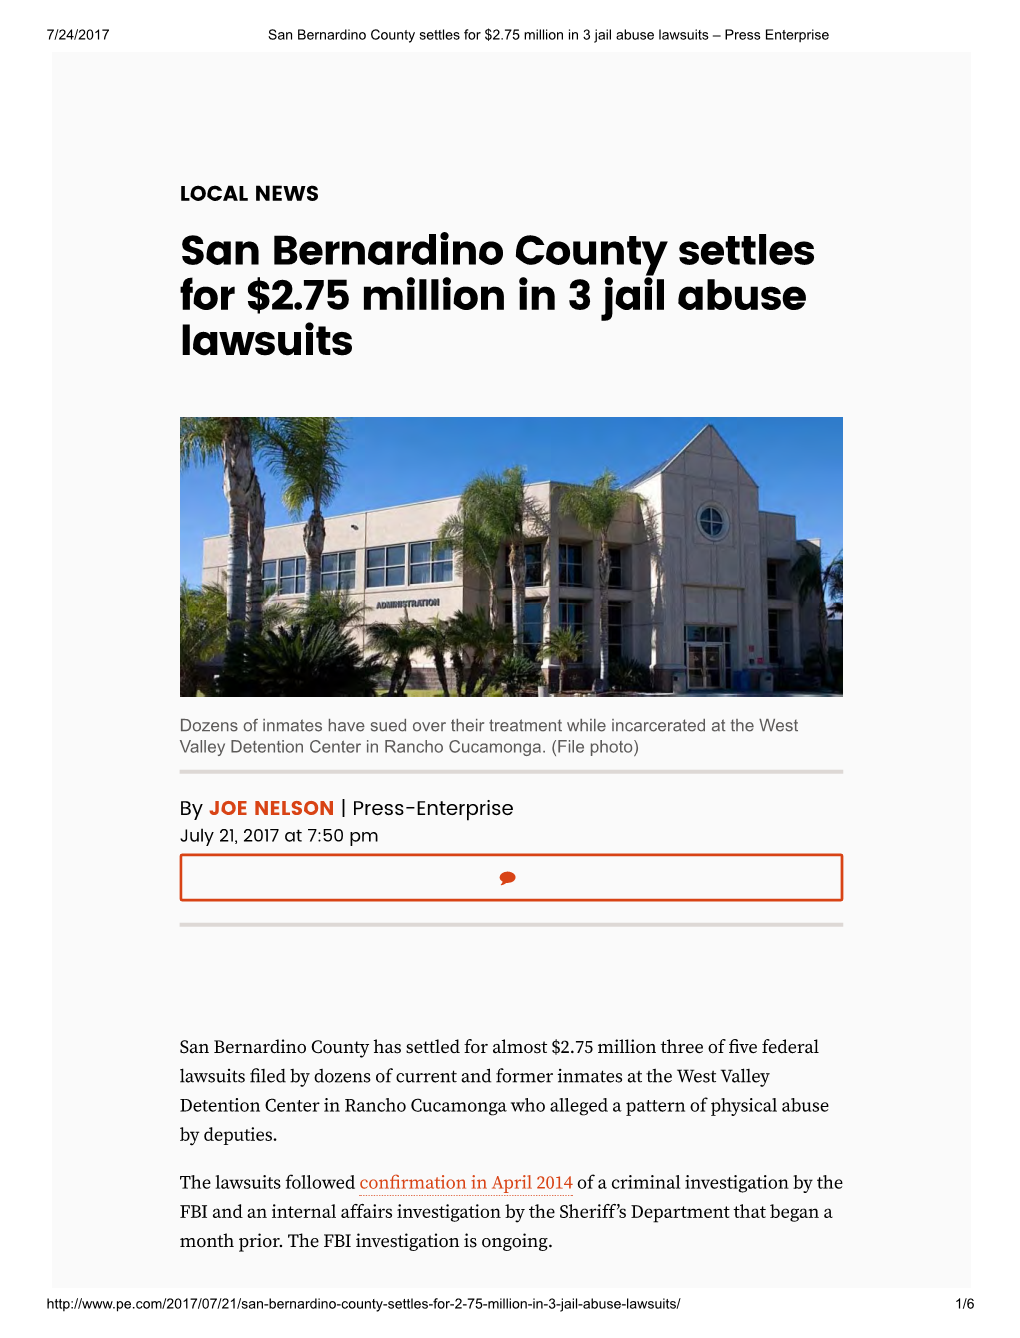 San Bernardino County Settles for $2.75 Million in 3 Jail Abuse Lawsuits – Press Enterprise